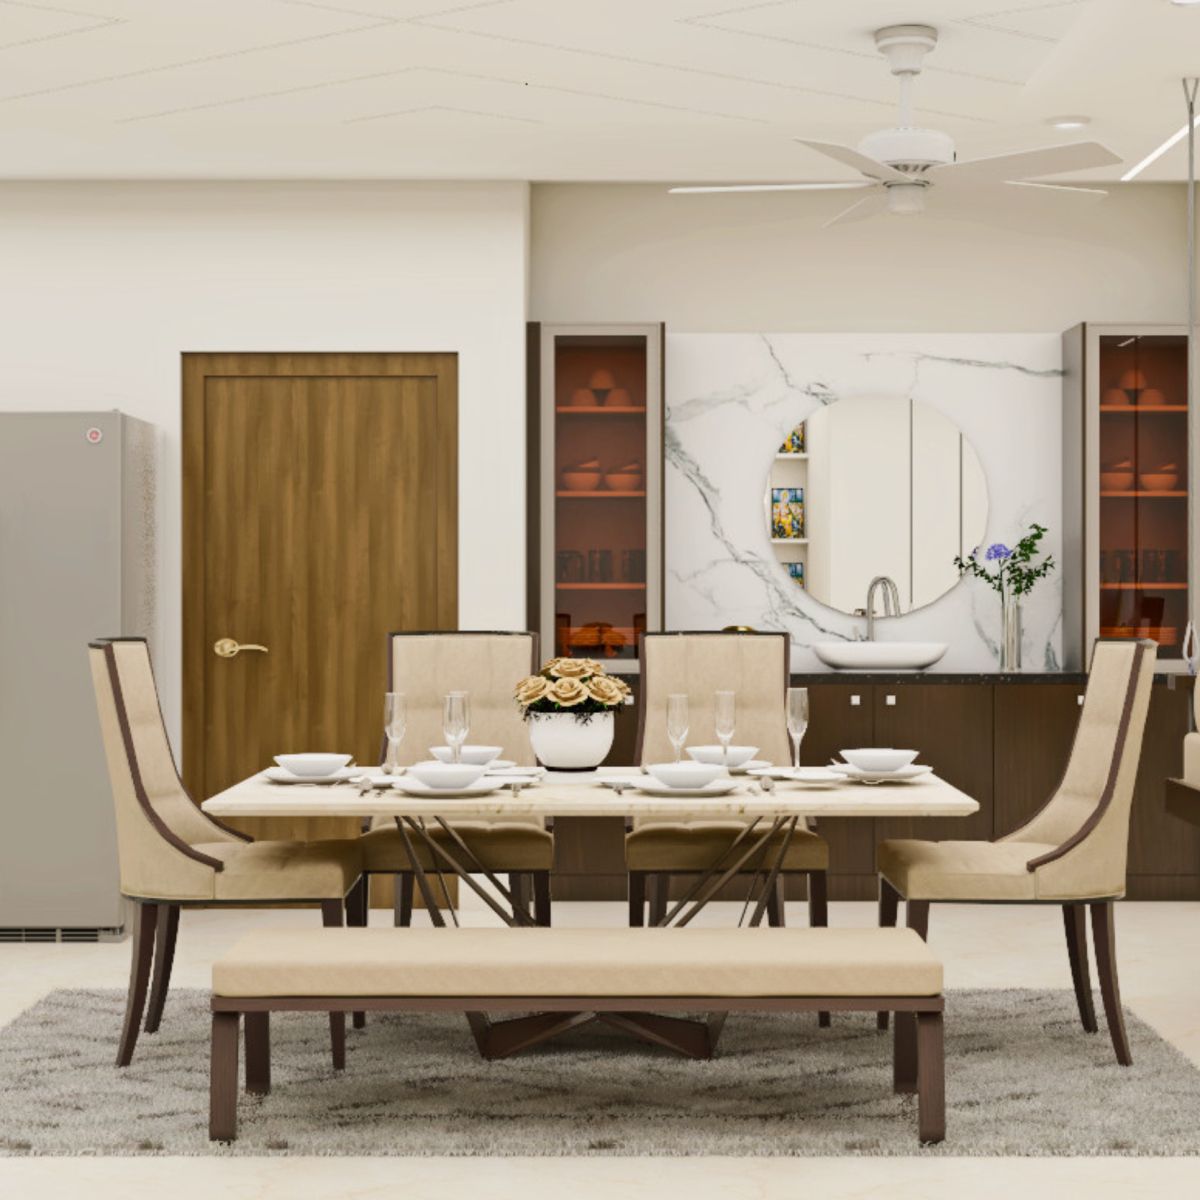 6-Seater Modern Dining Room Design